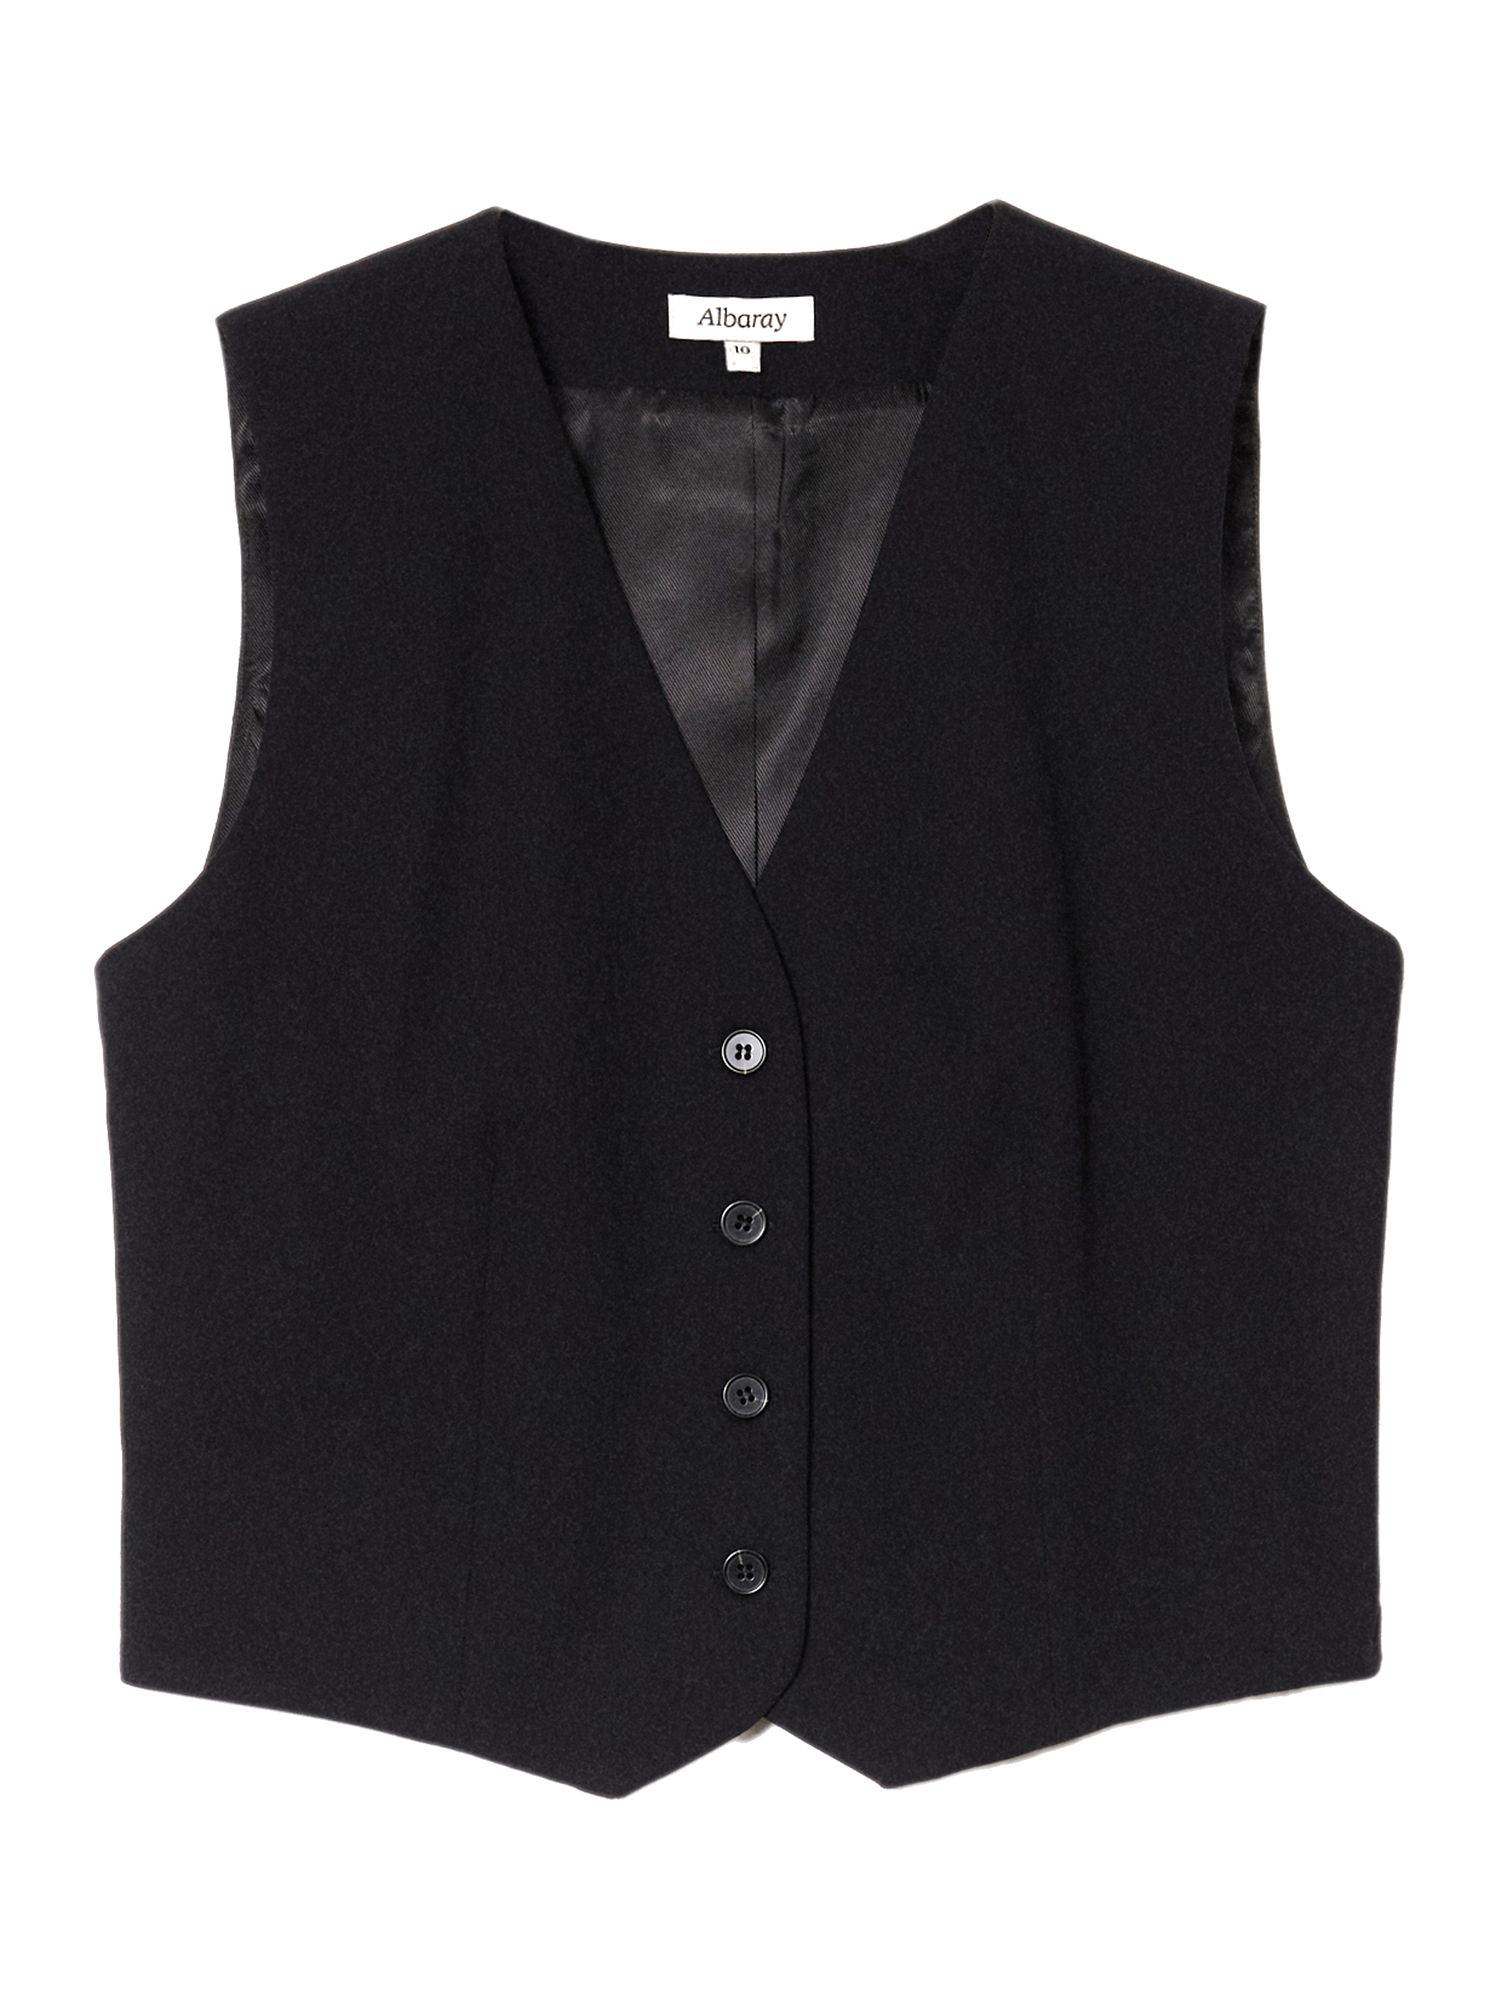 Albaray Plain Tailored Waistcoat, Black at John Lewis & Partners